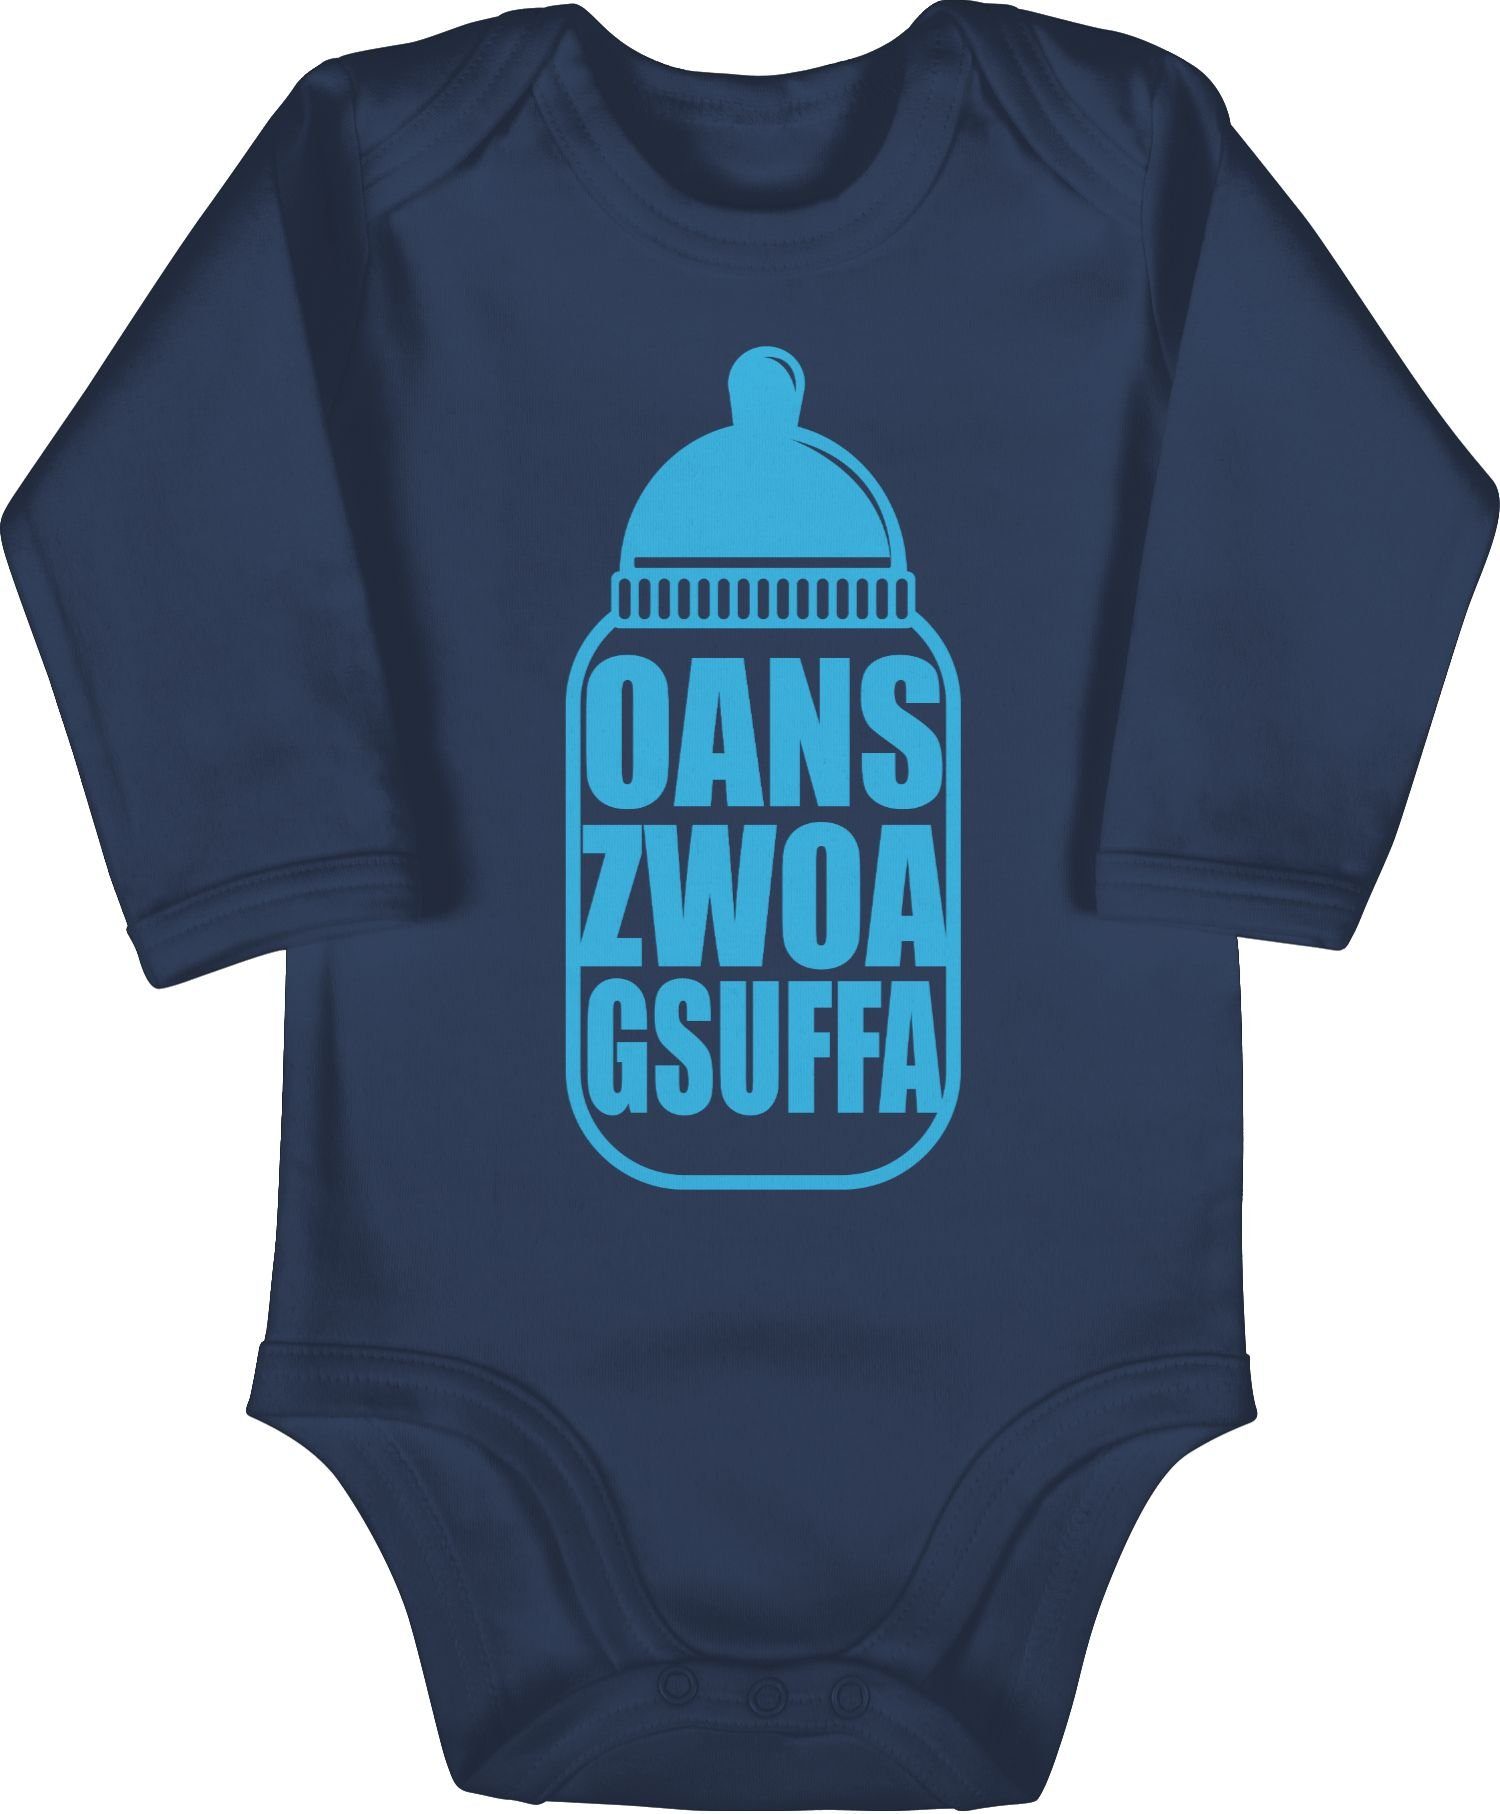 Shirtracer Shirtbody Babyflasche Baby Mode Oktoberfest Blau Oans blau Outfit Zwoa für Gsuffa 1 Navy